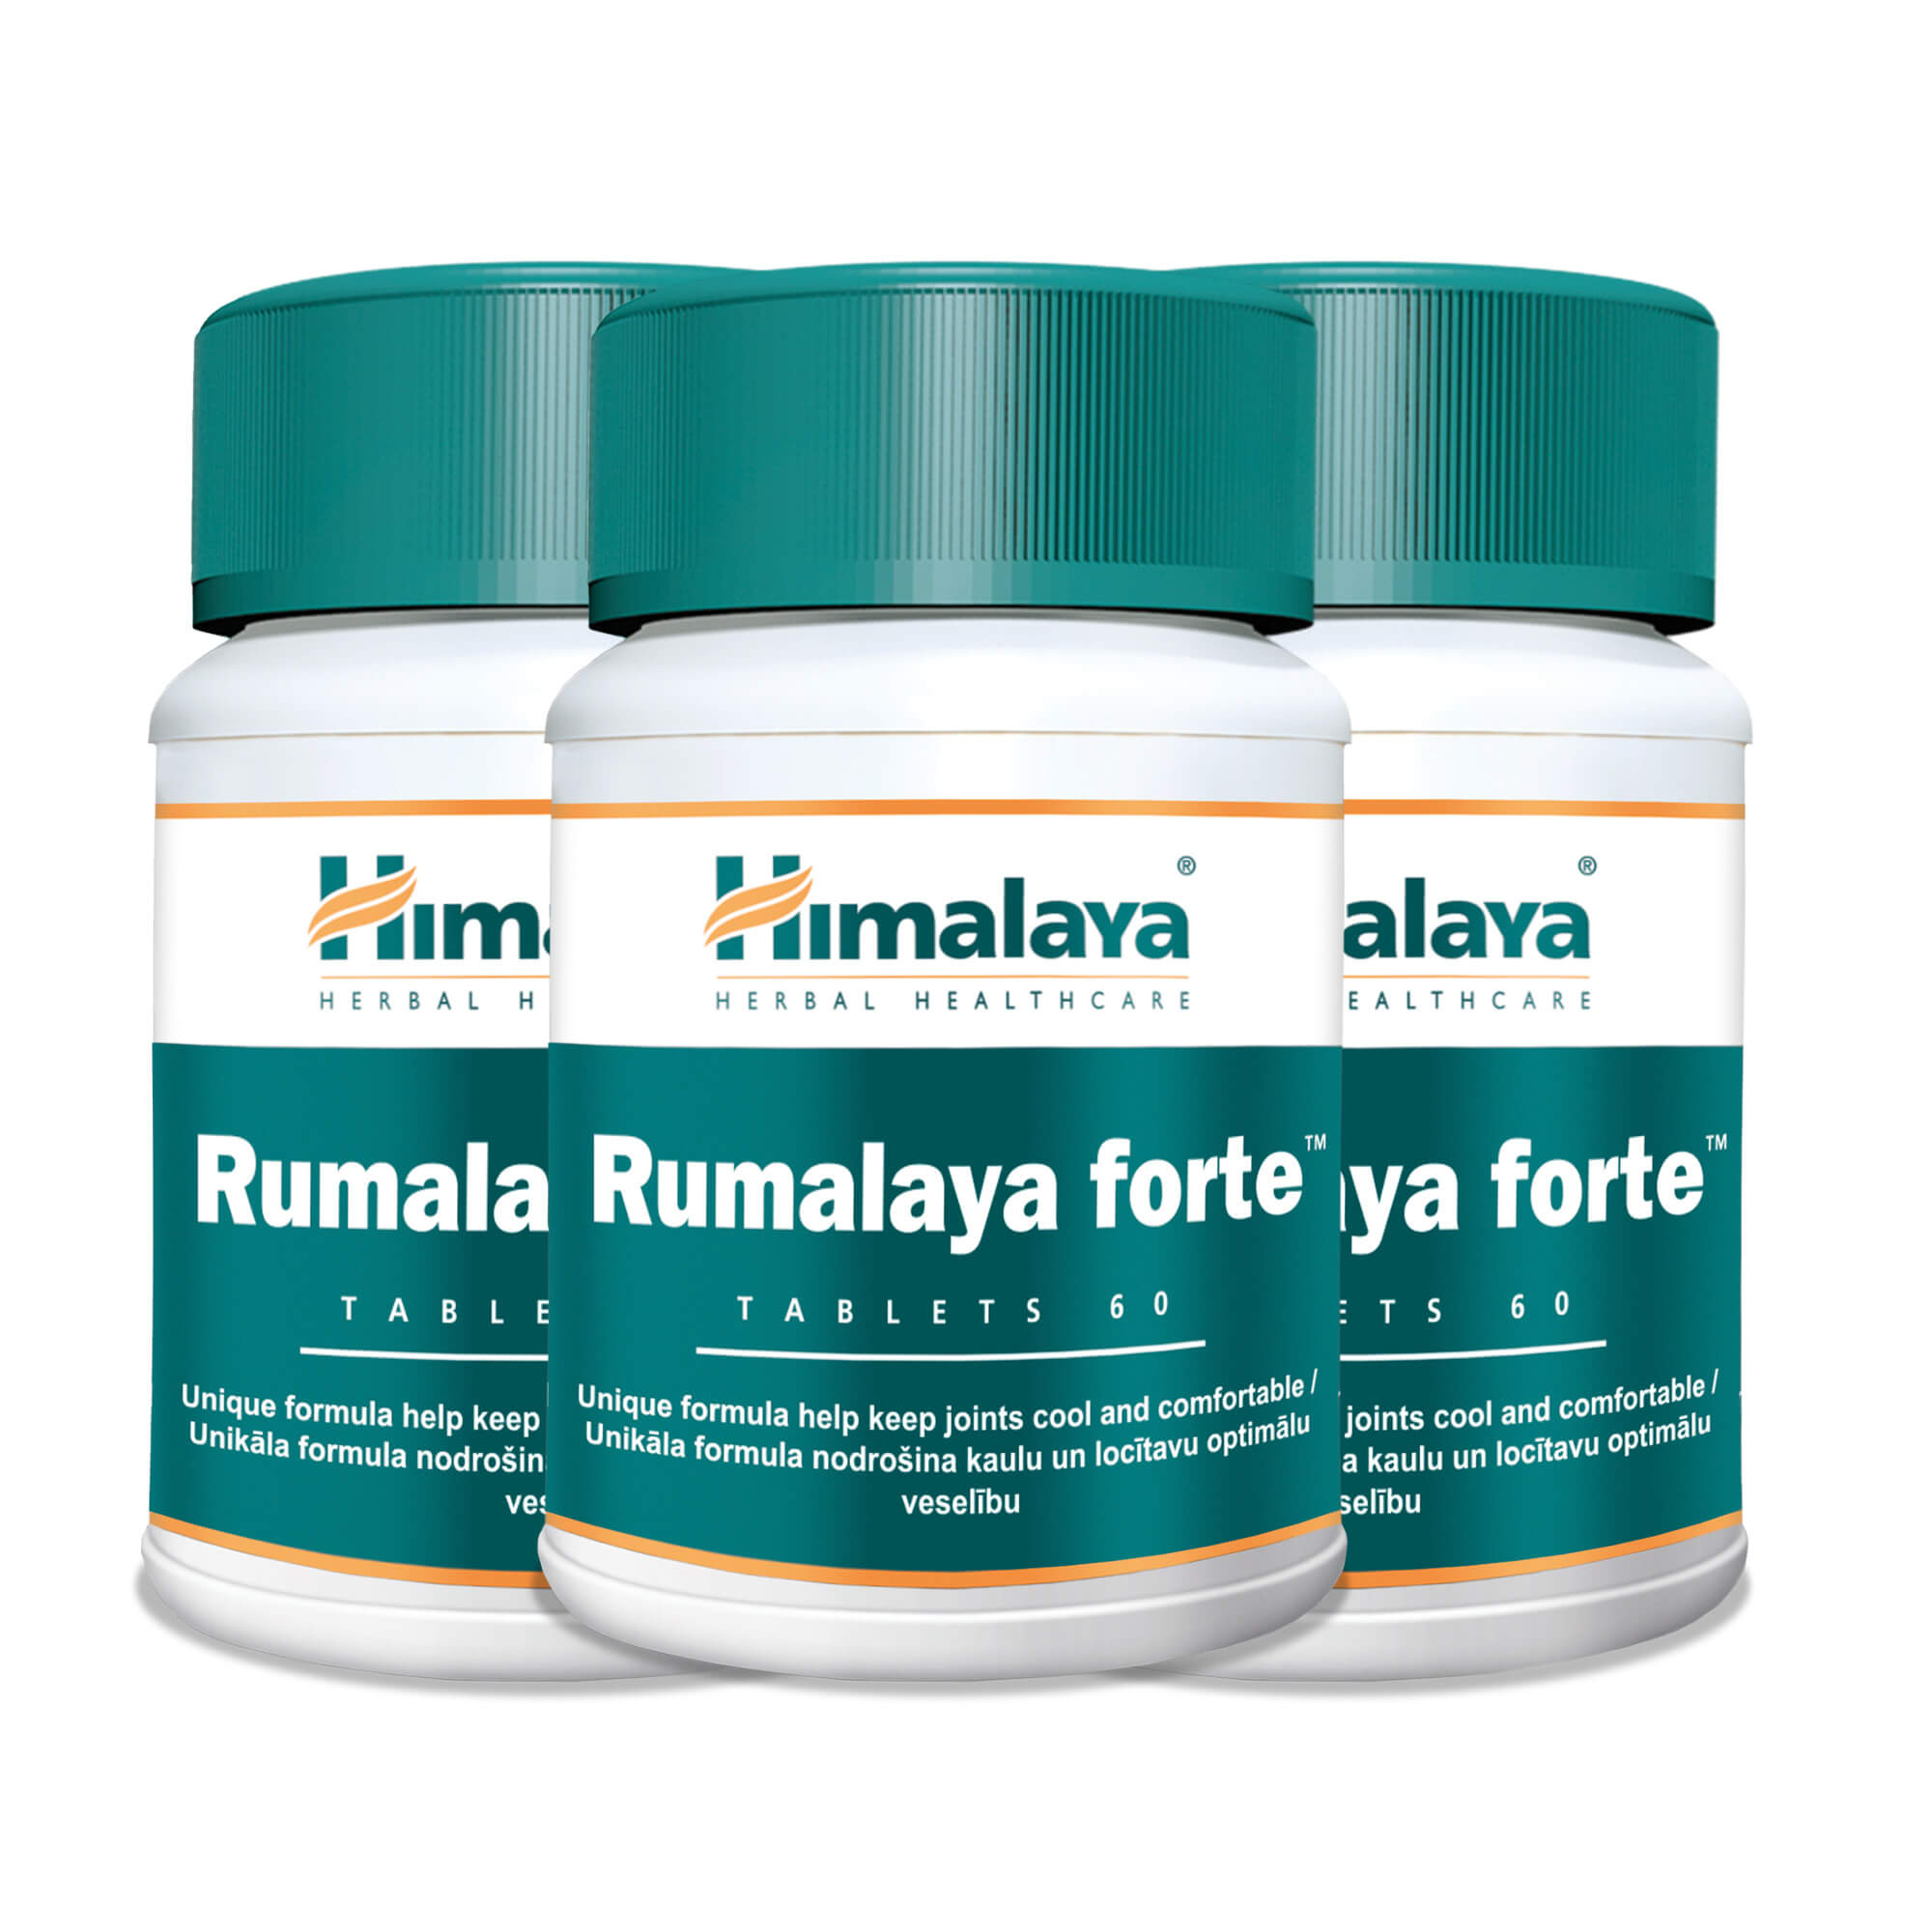 Himalaya Rumalaya forte - 60 Tablets (Pack of 3)